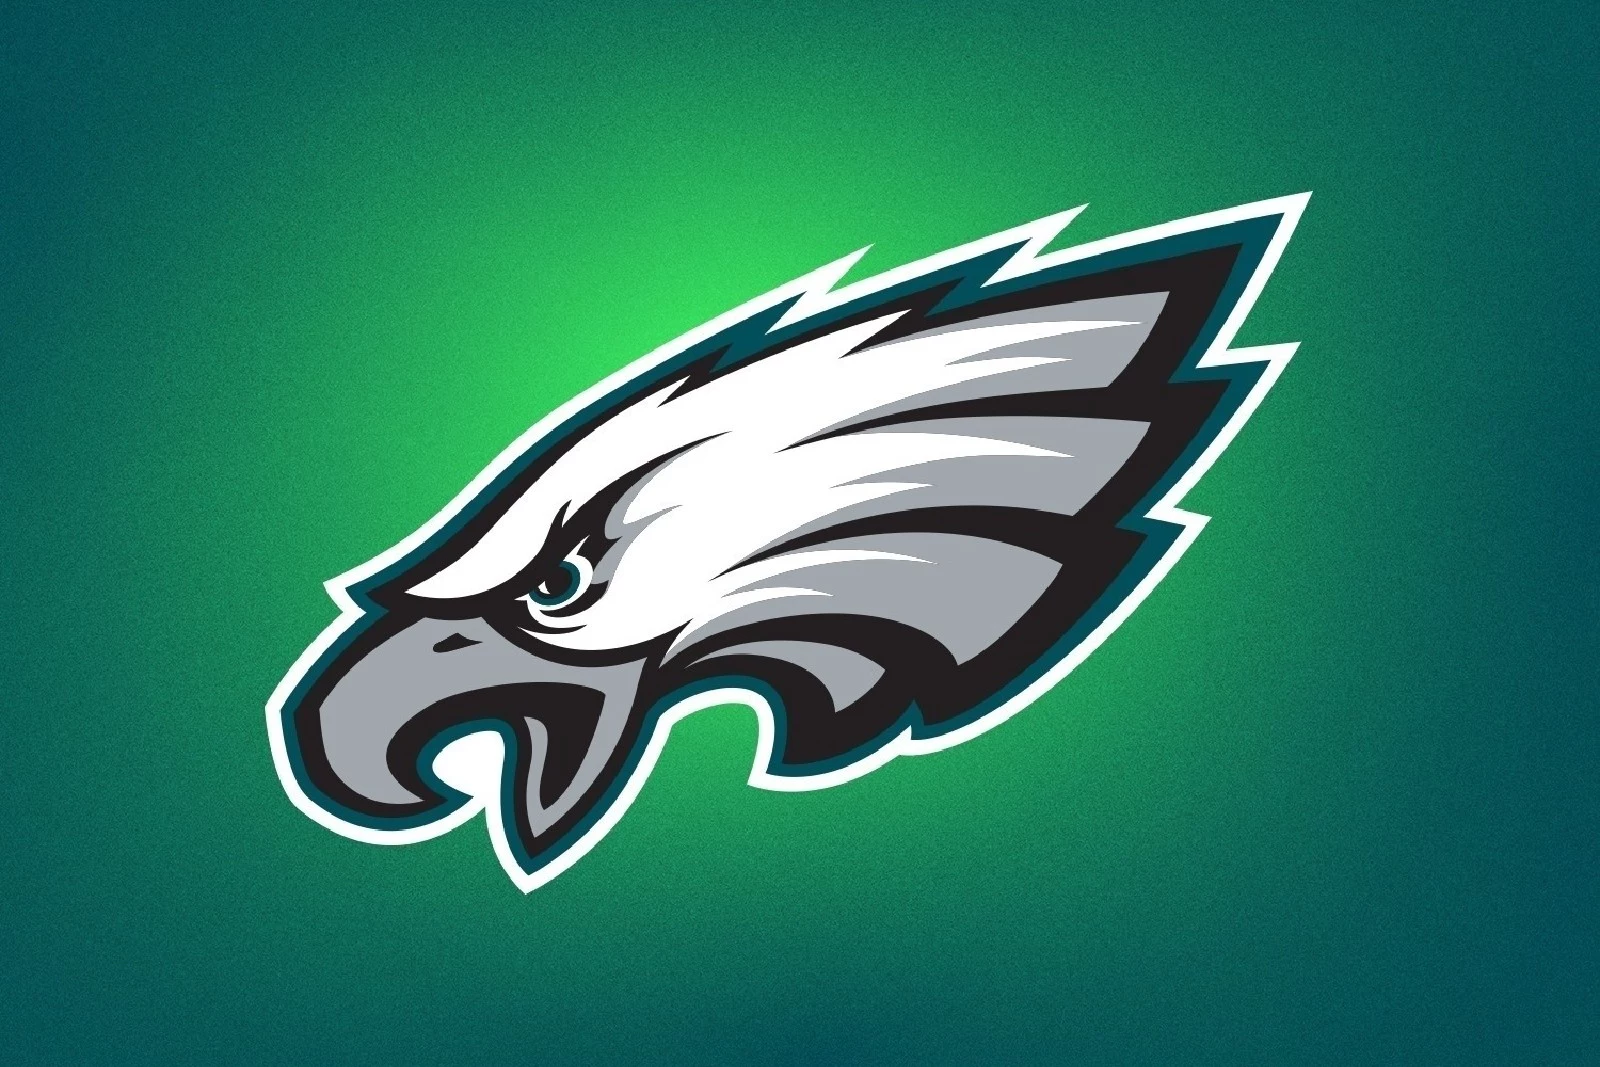 Eagles Kelly Green jerseys for sale at team pro shops Monday - CBS  Philadelphia